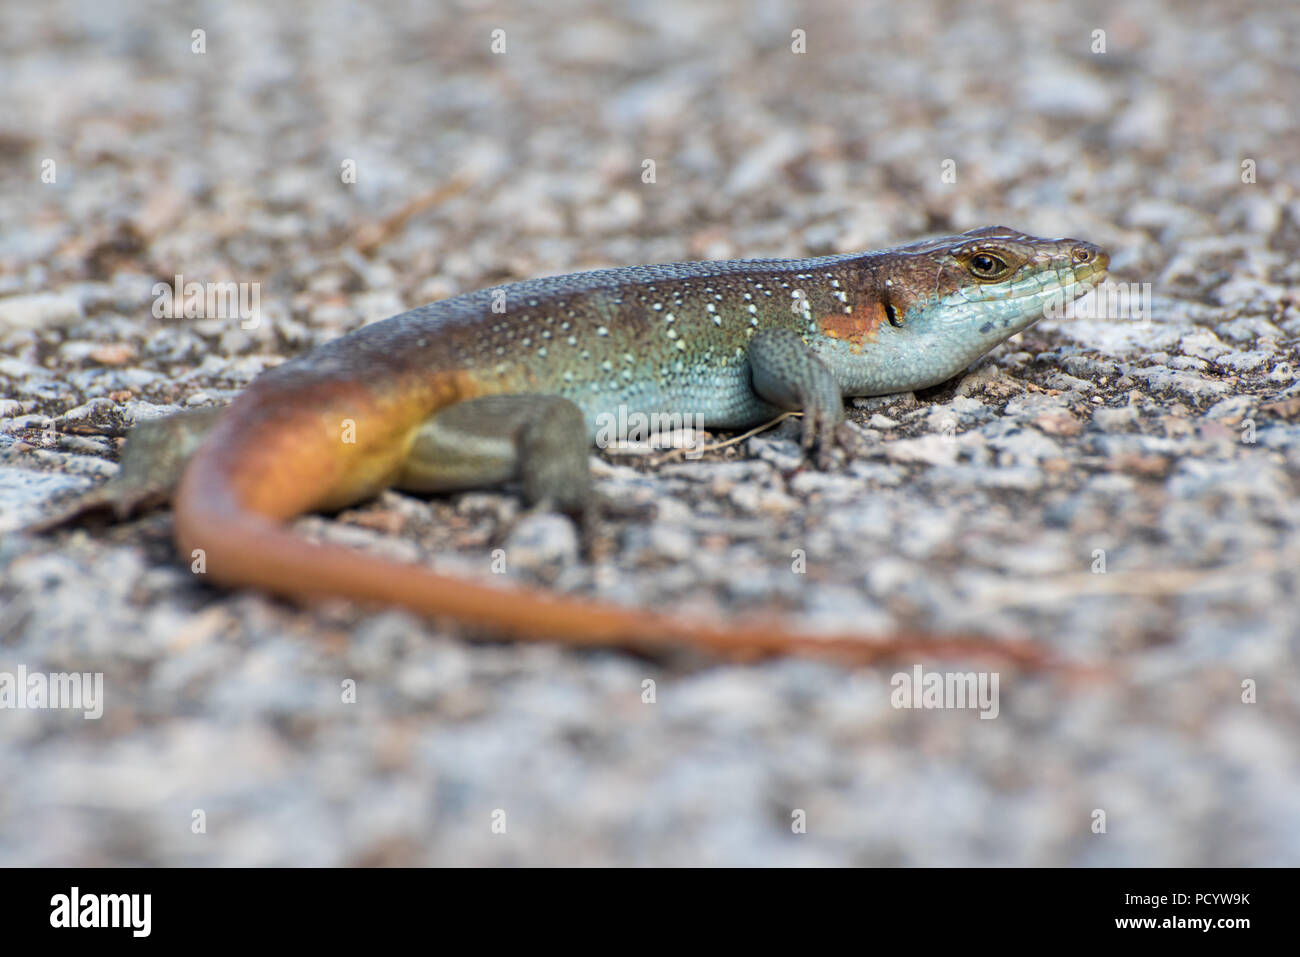 Macro photograph of colorful rainbow skink (lizard) close up lying on gravel ground Stock Photo